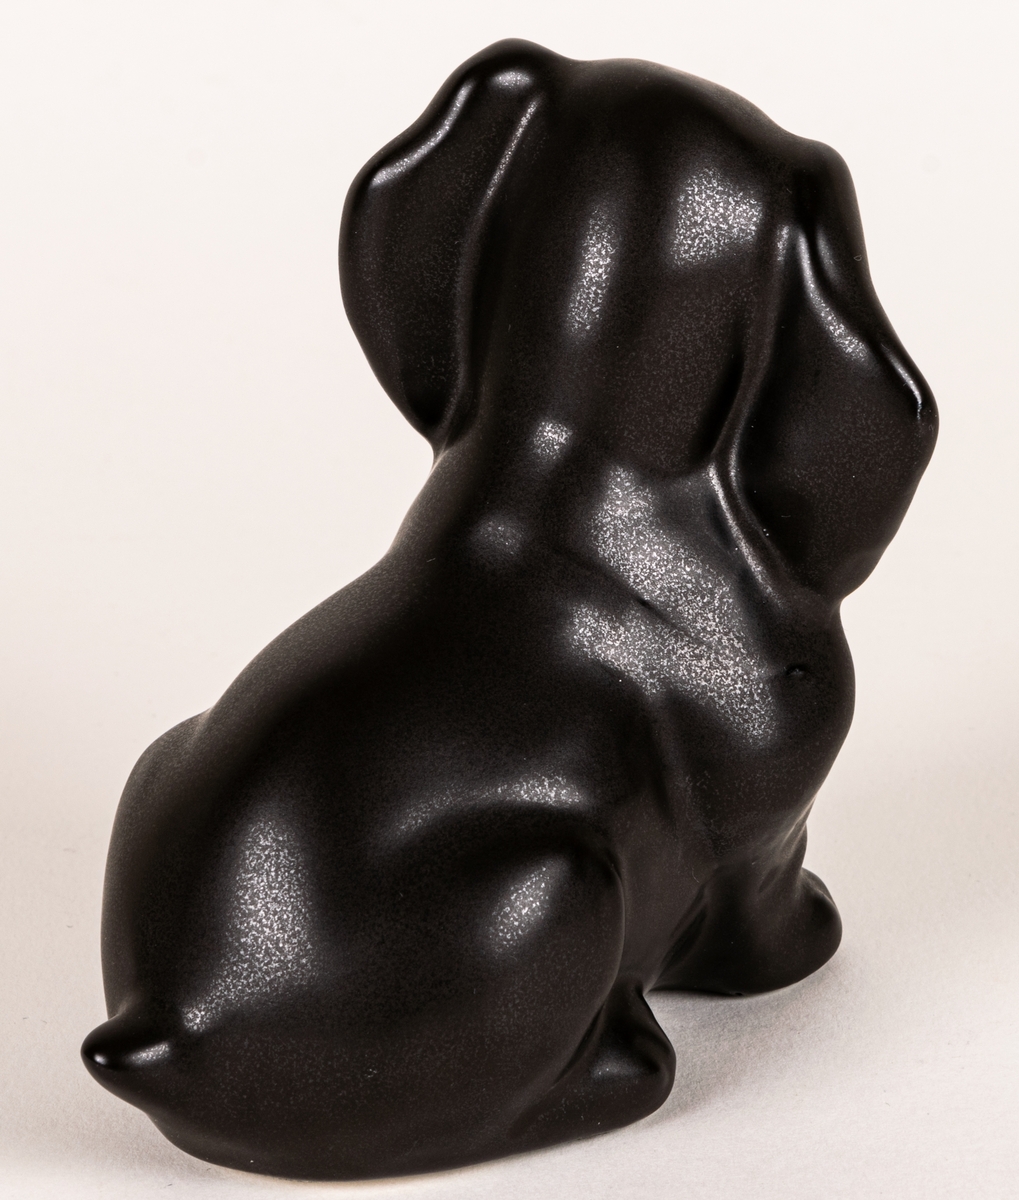 Figurin, taxvalpen Wawa, glasyr Mangania, formgjuten, formgiven av Lillemor Mannerheim 1955.